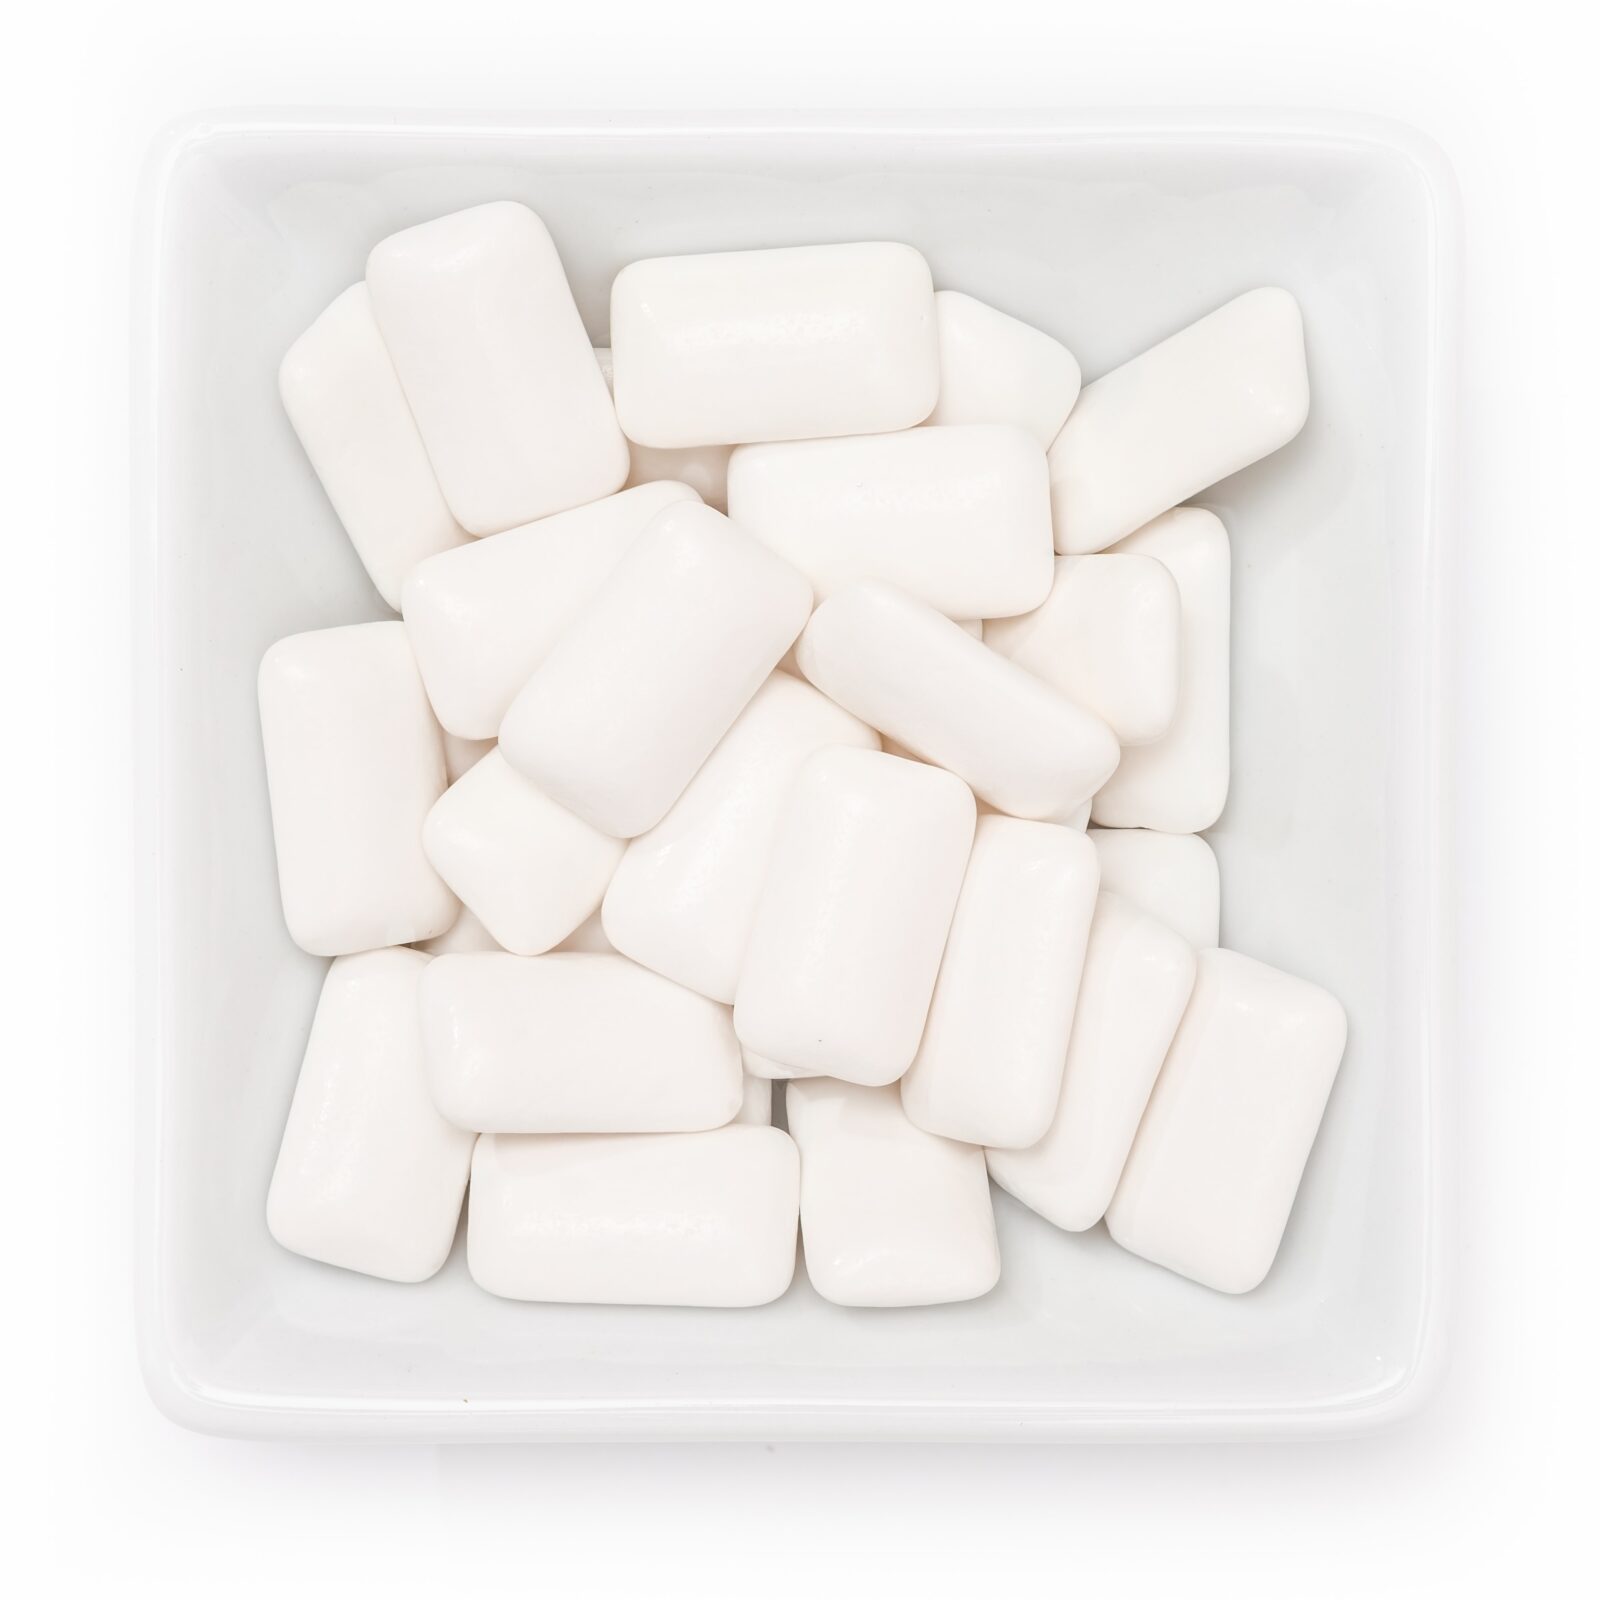 white sugar-free gum pieces in a bowl